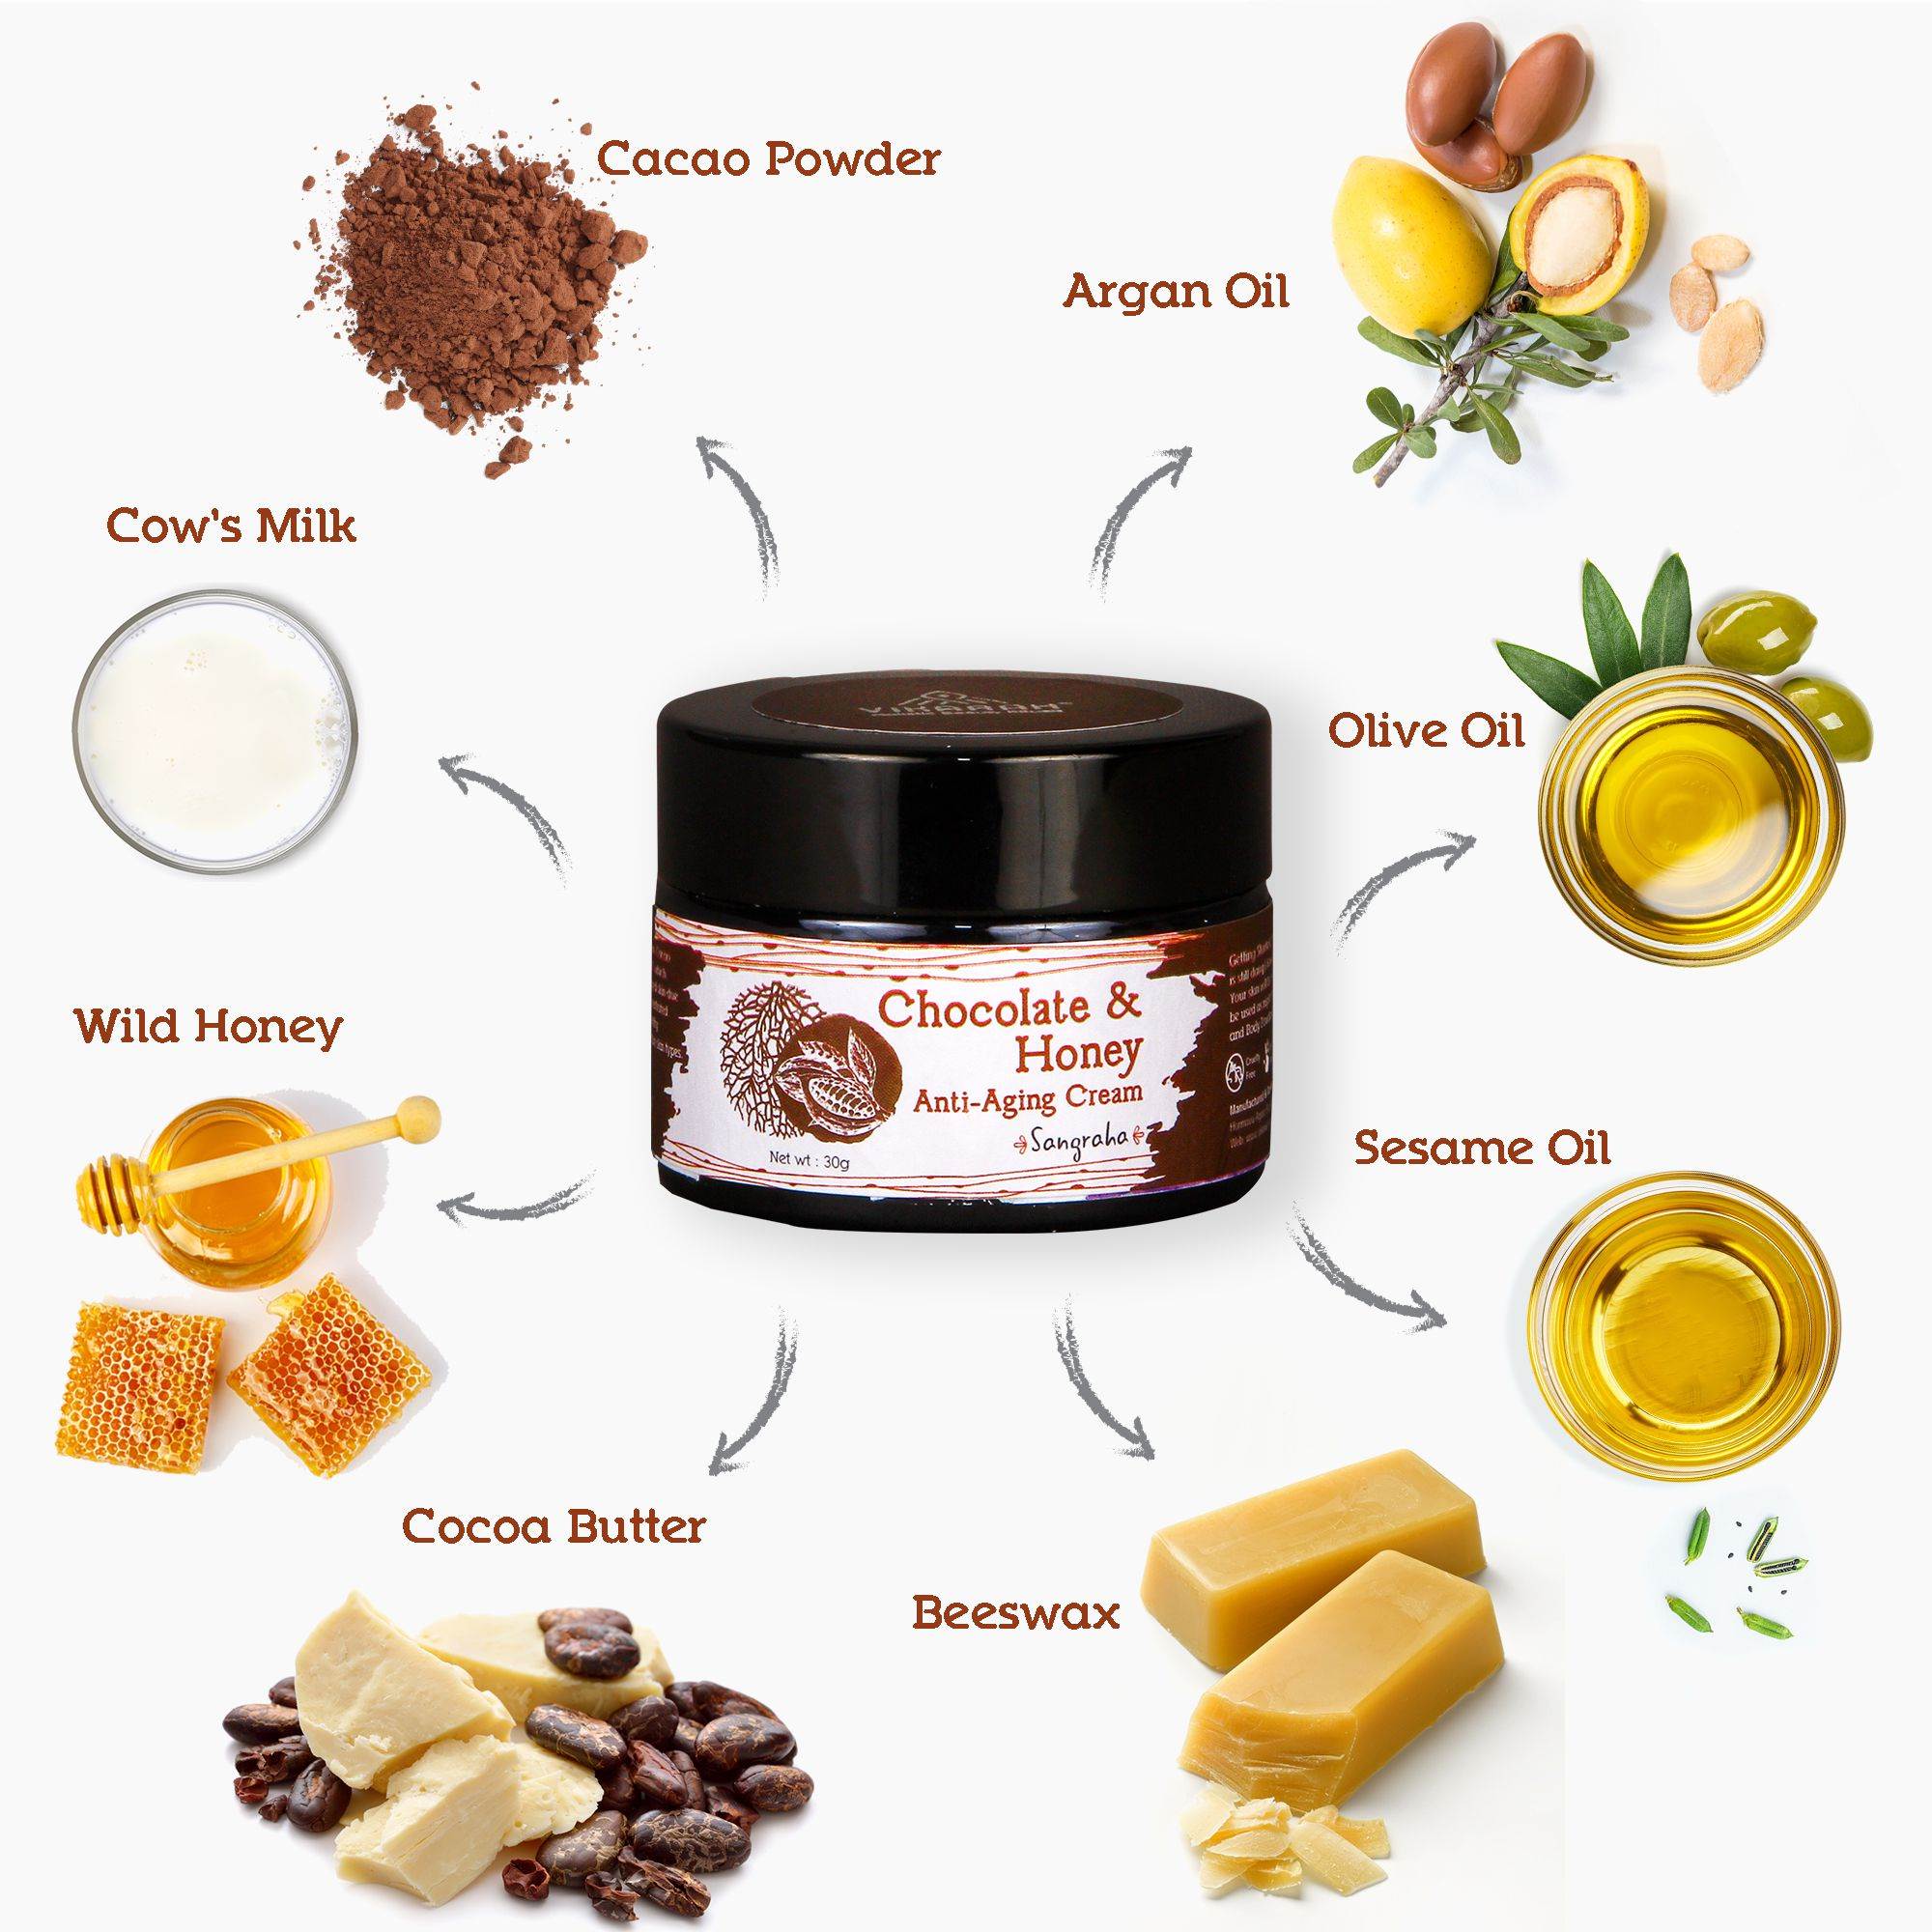 Chocolate And Honey Anti-Aging Cream